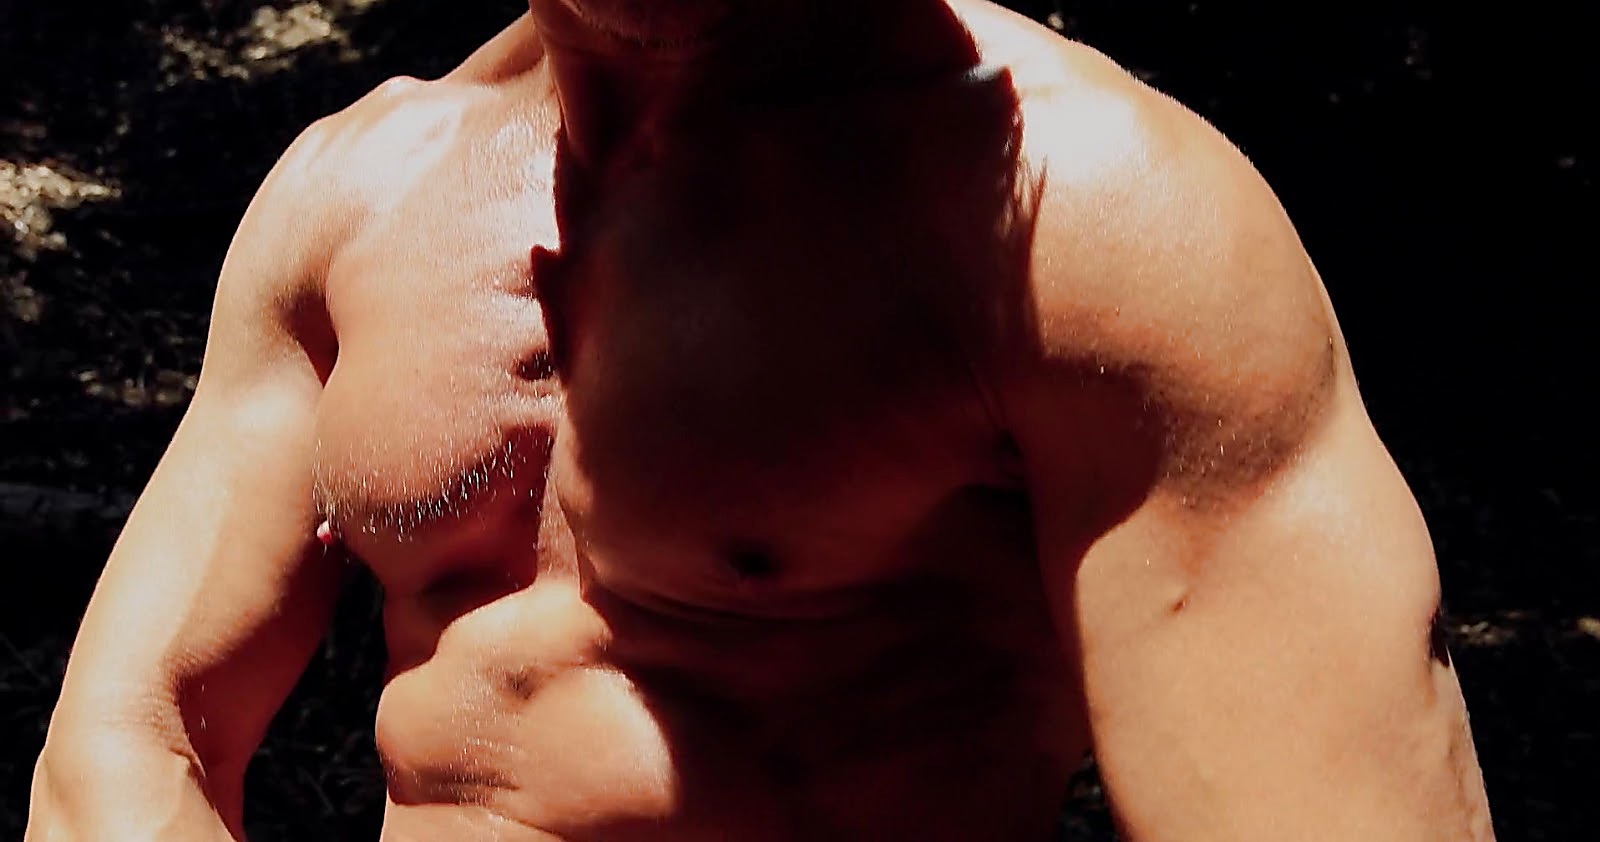 Paul Logan sexy shirtless scene November 10, 2019, 3pm